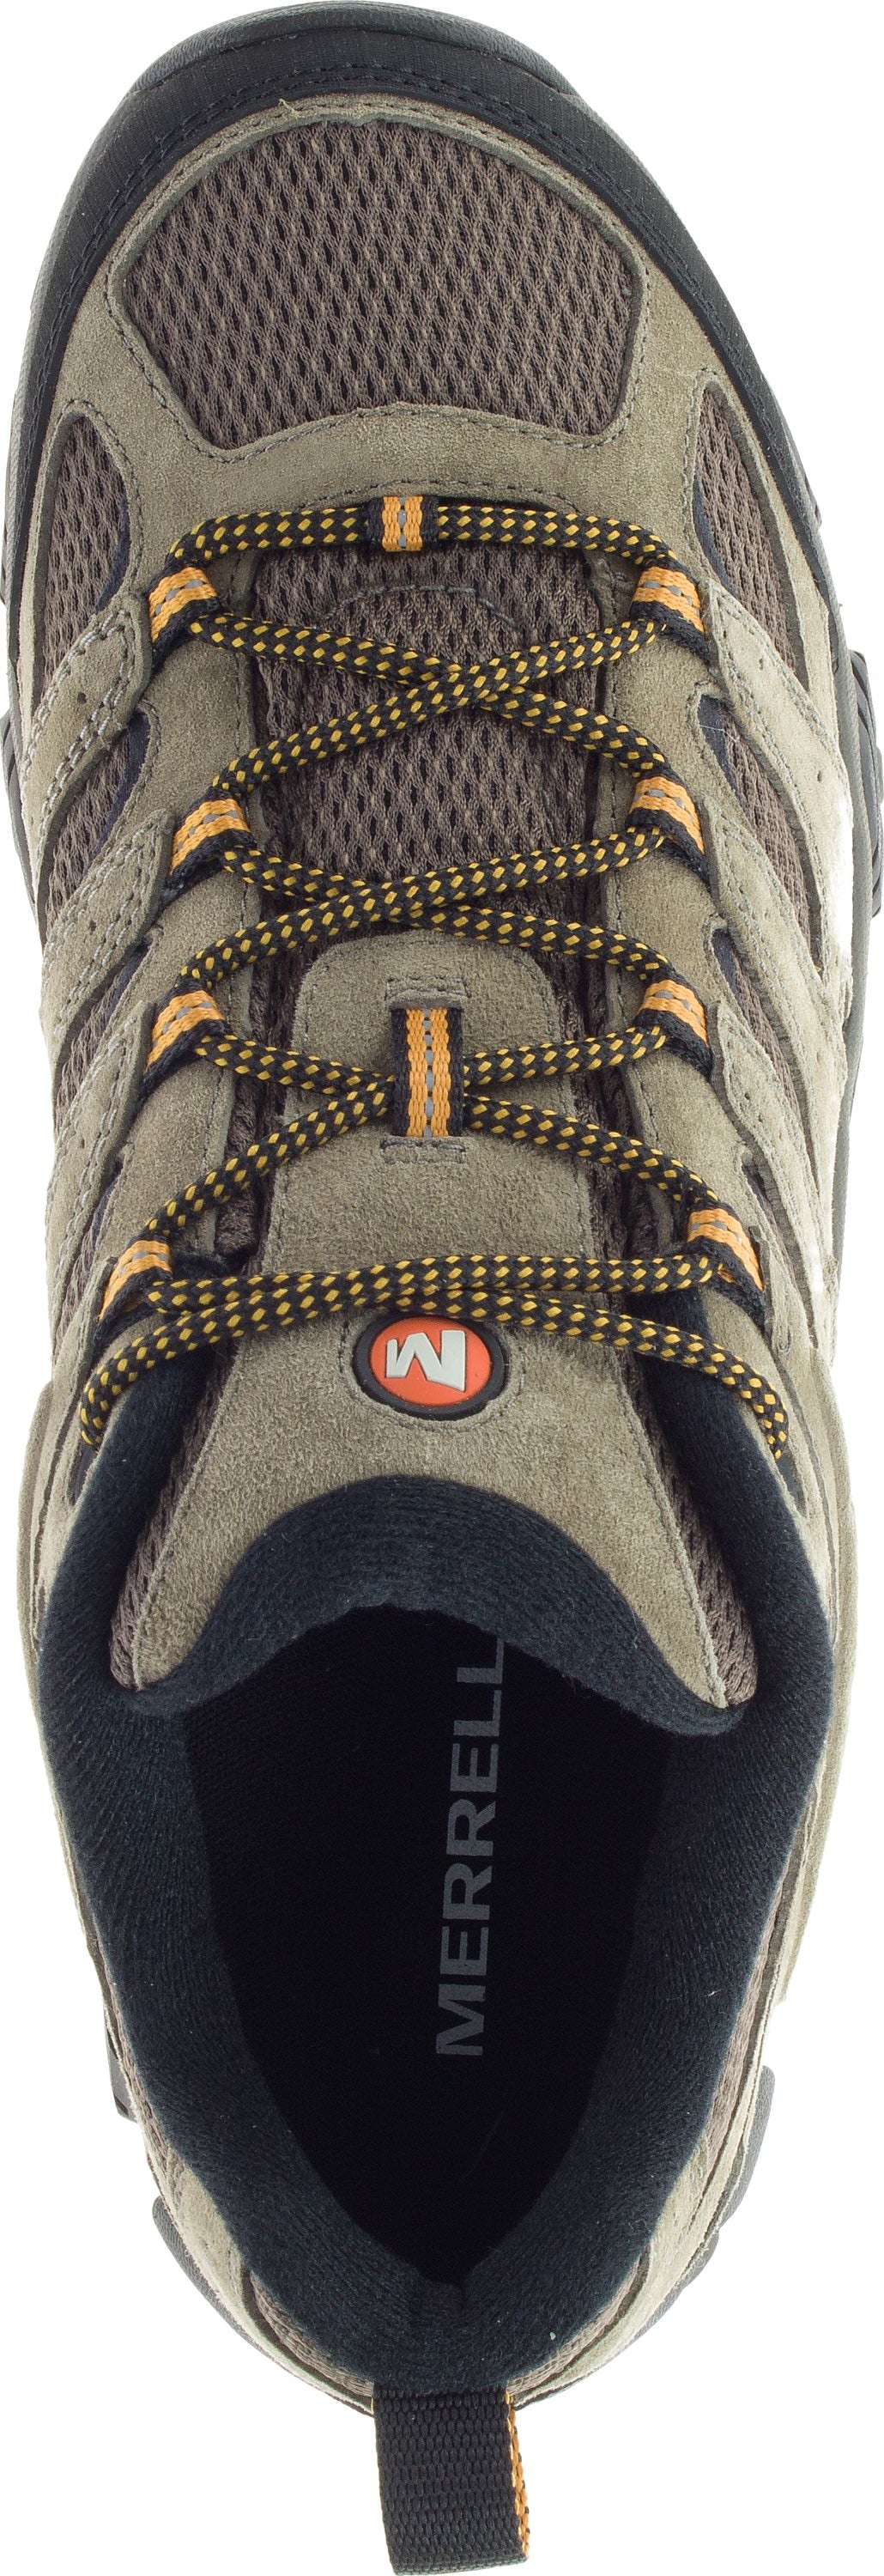 Merrell Shoes Moab 3 Walnut